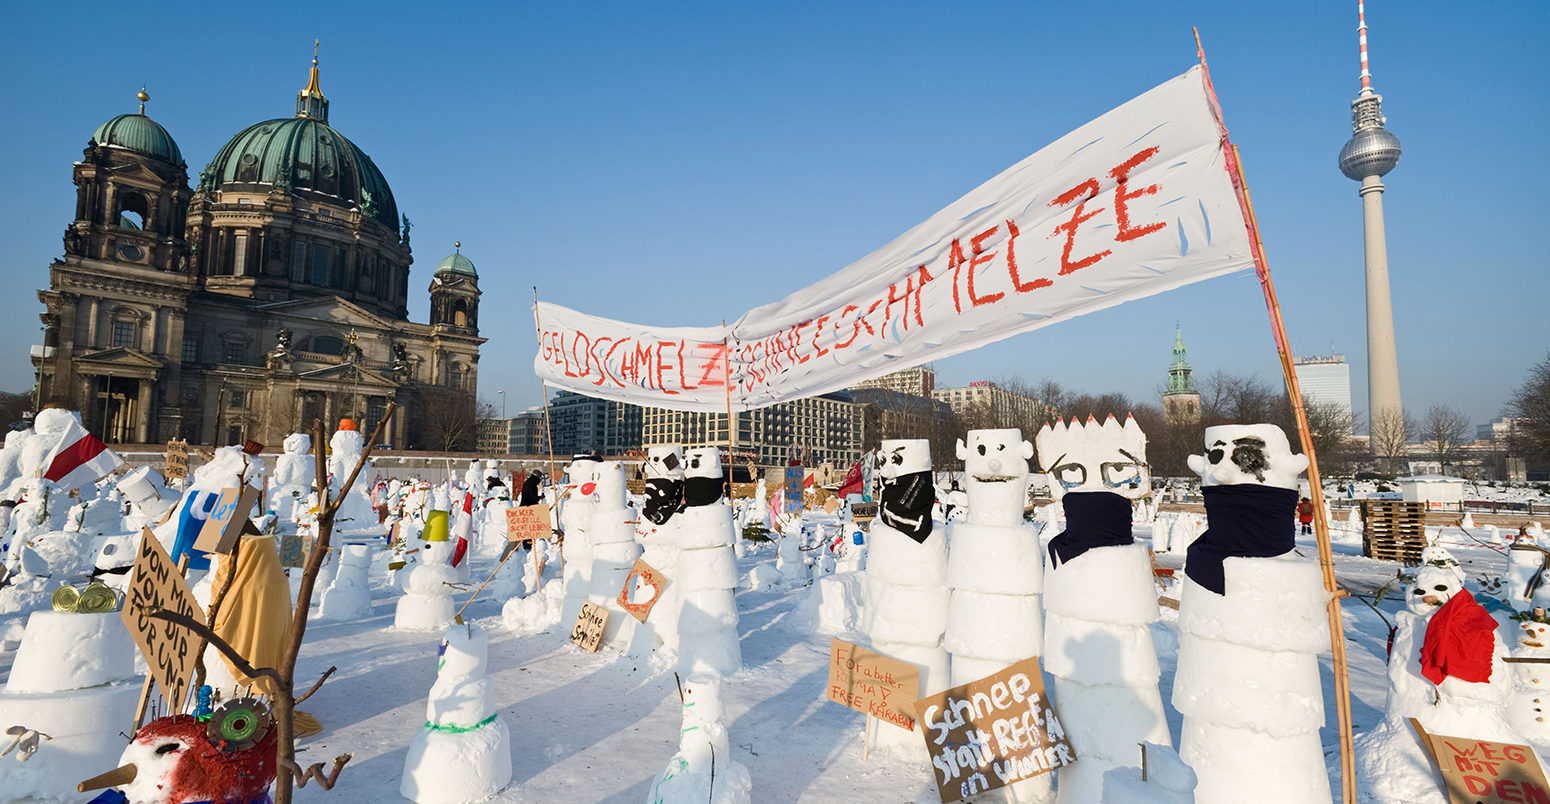 BJE32H Snowman Demo 2010 on the Schlossplatz, Castle Square, Berlin, Germany, Europe.